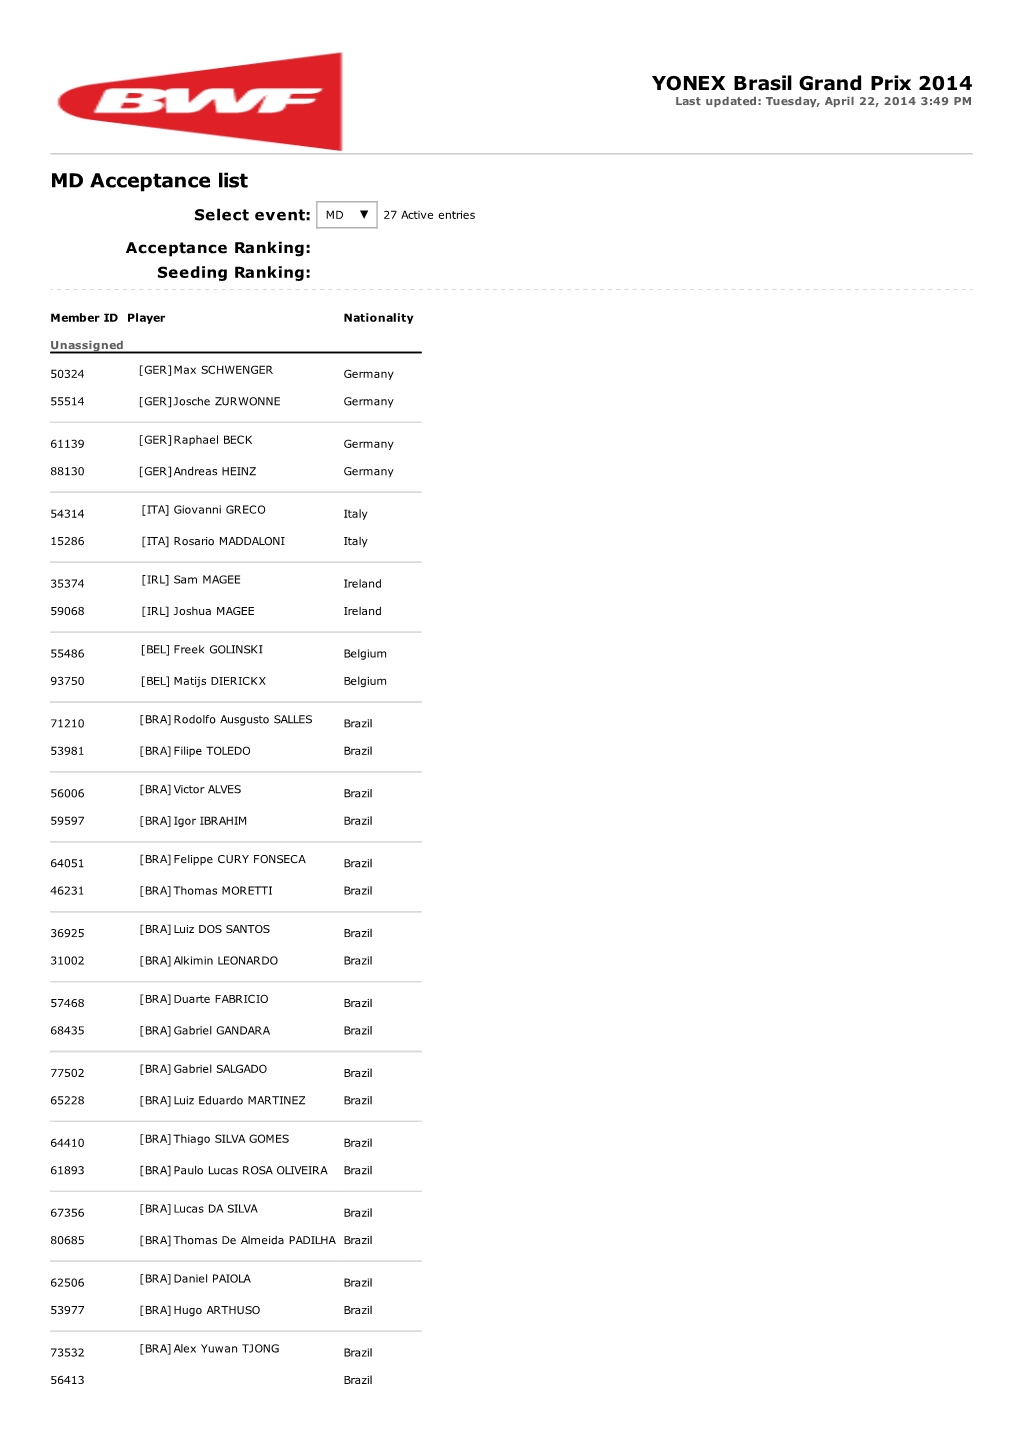 MD Acceptance List YONEX Brasil Grand Prix 2014